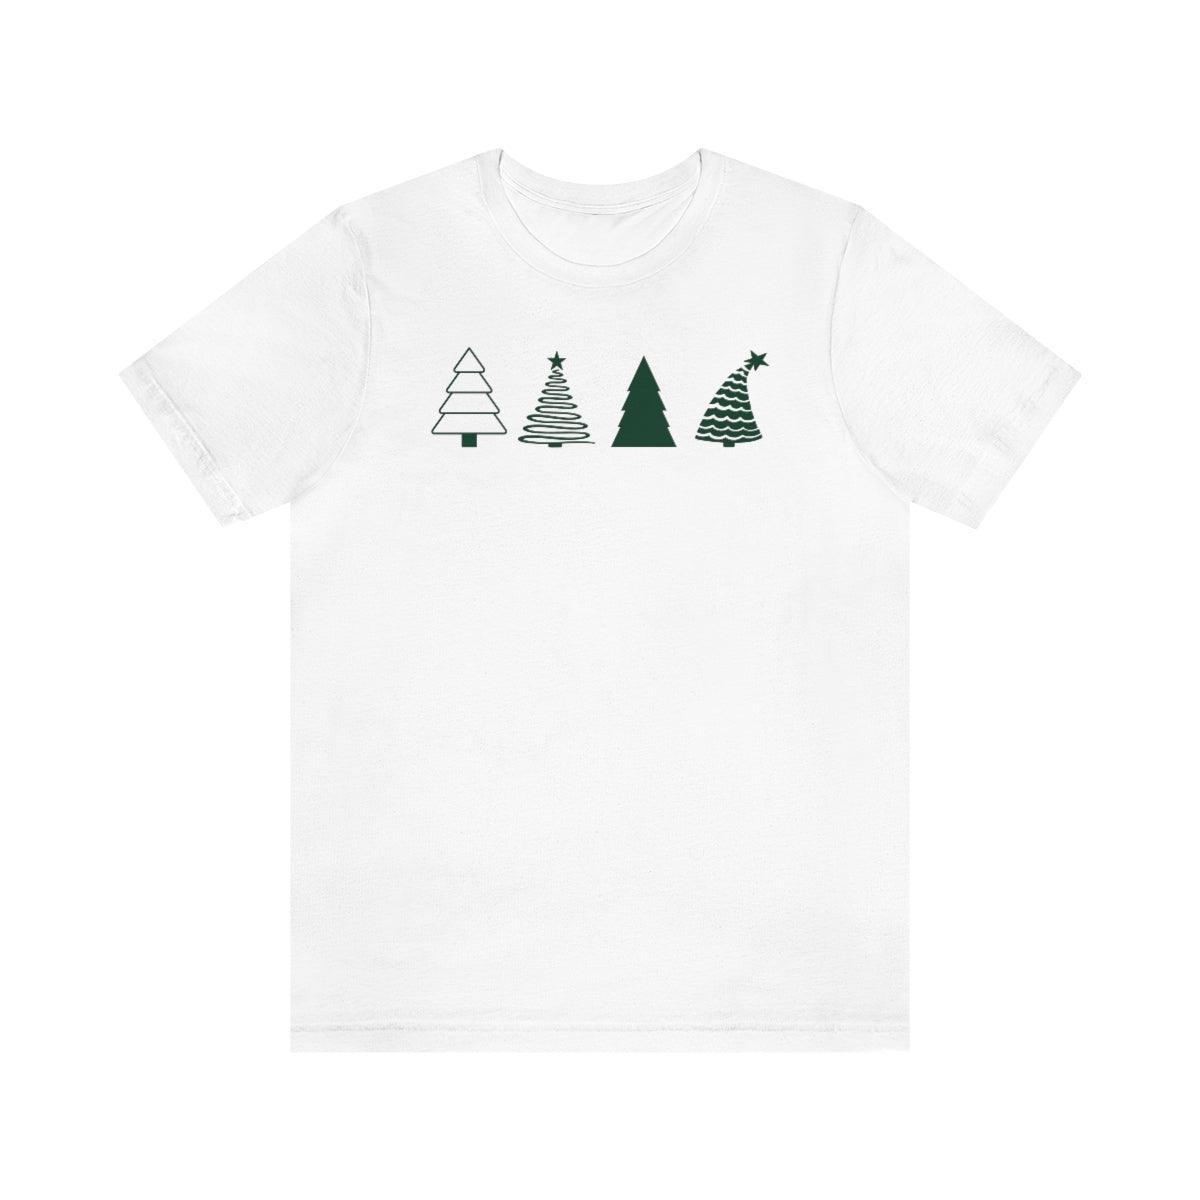 Christmas Trees Christmas Shirt Short Sleeve Tee - Crystal Rose Design Co.